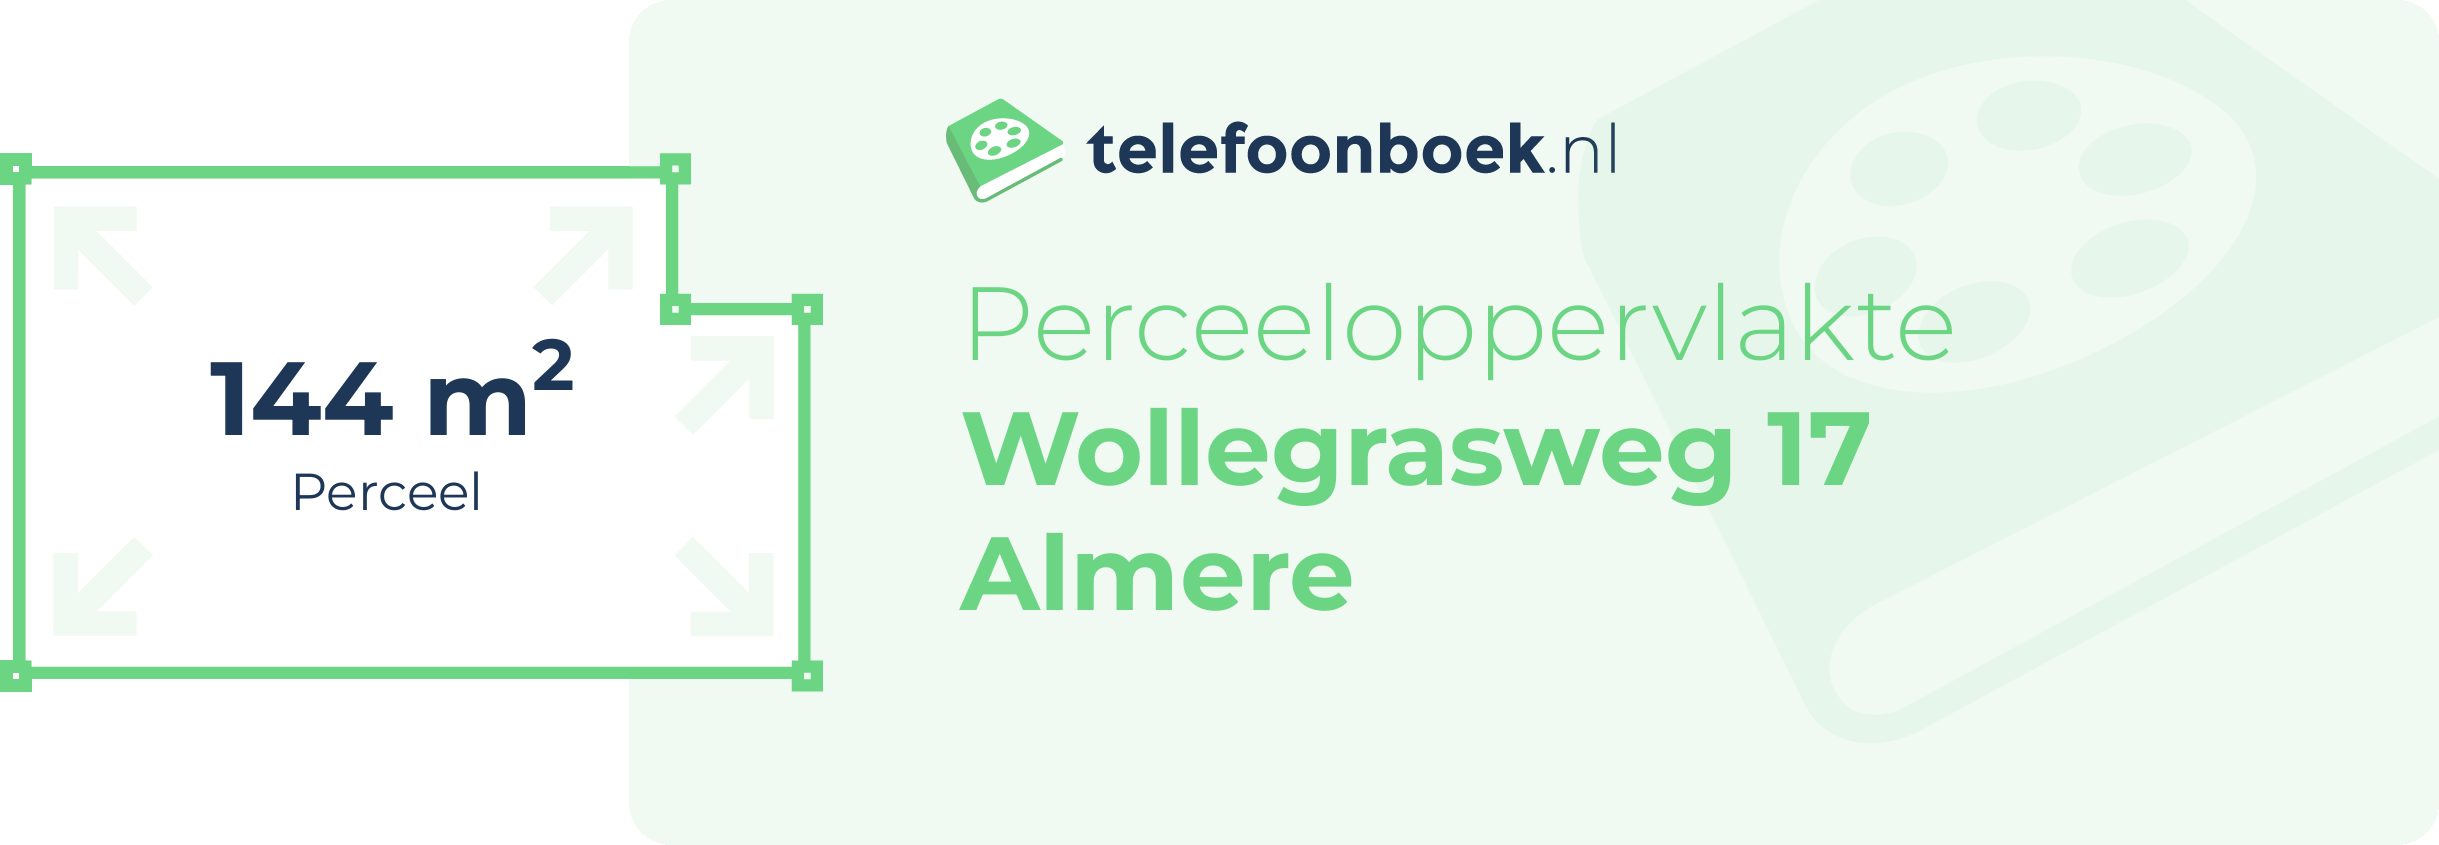 Perceeloppervlakte Wollegrasweg 17 Almere